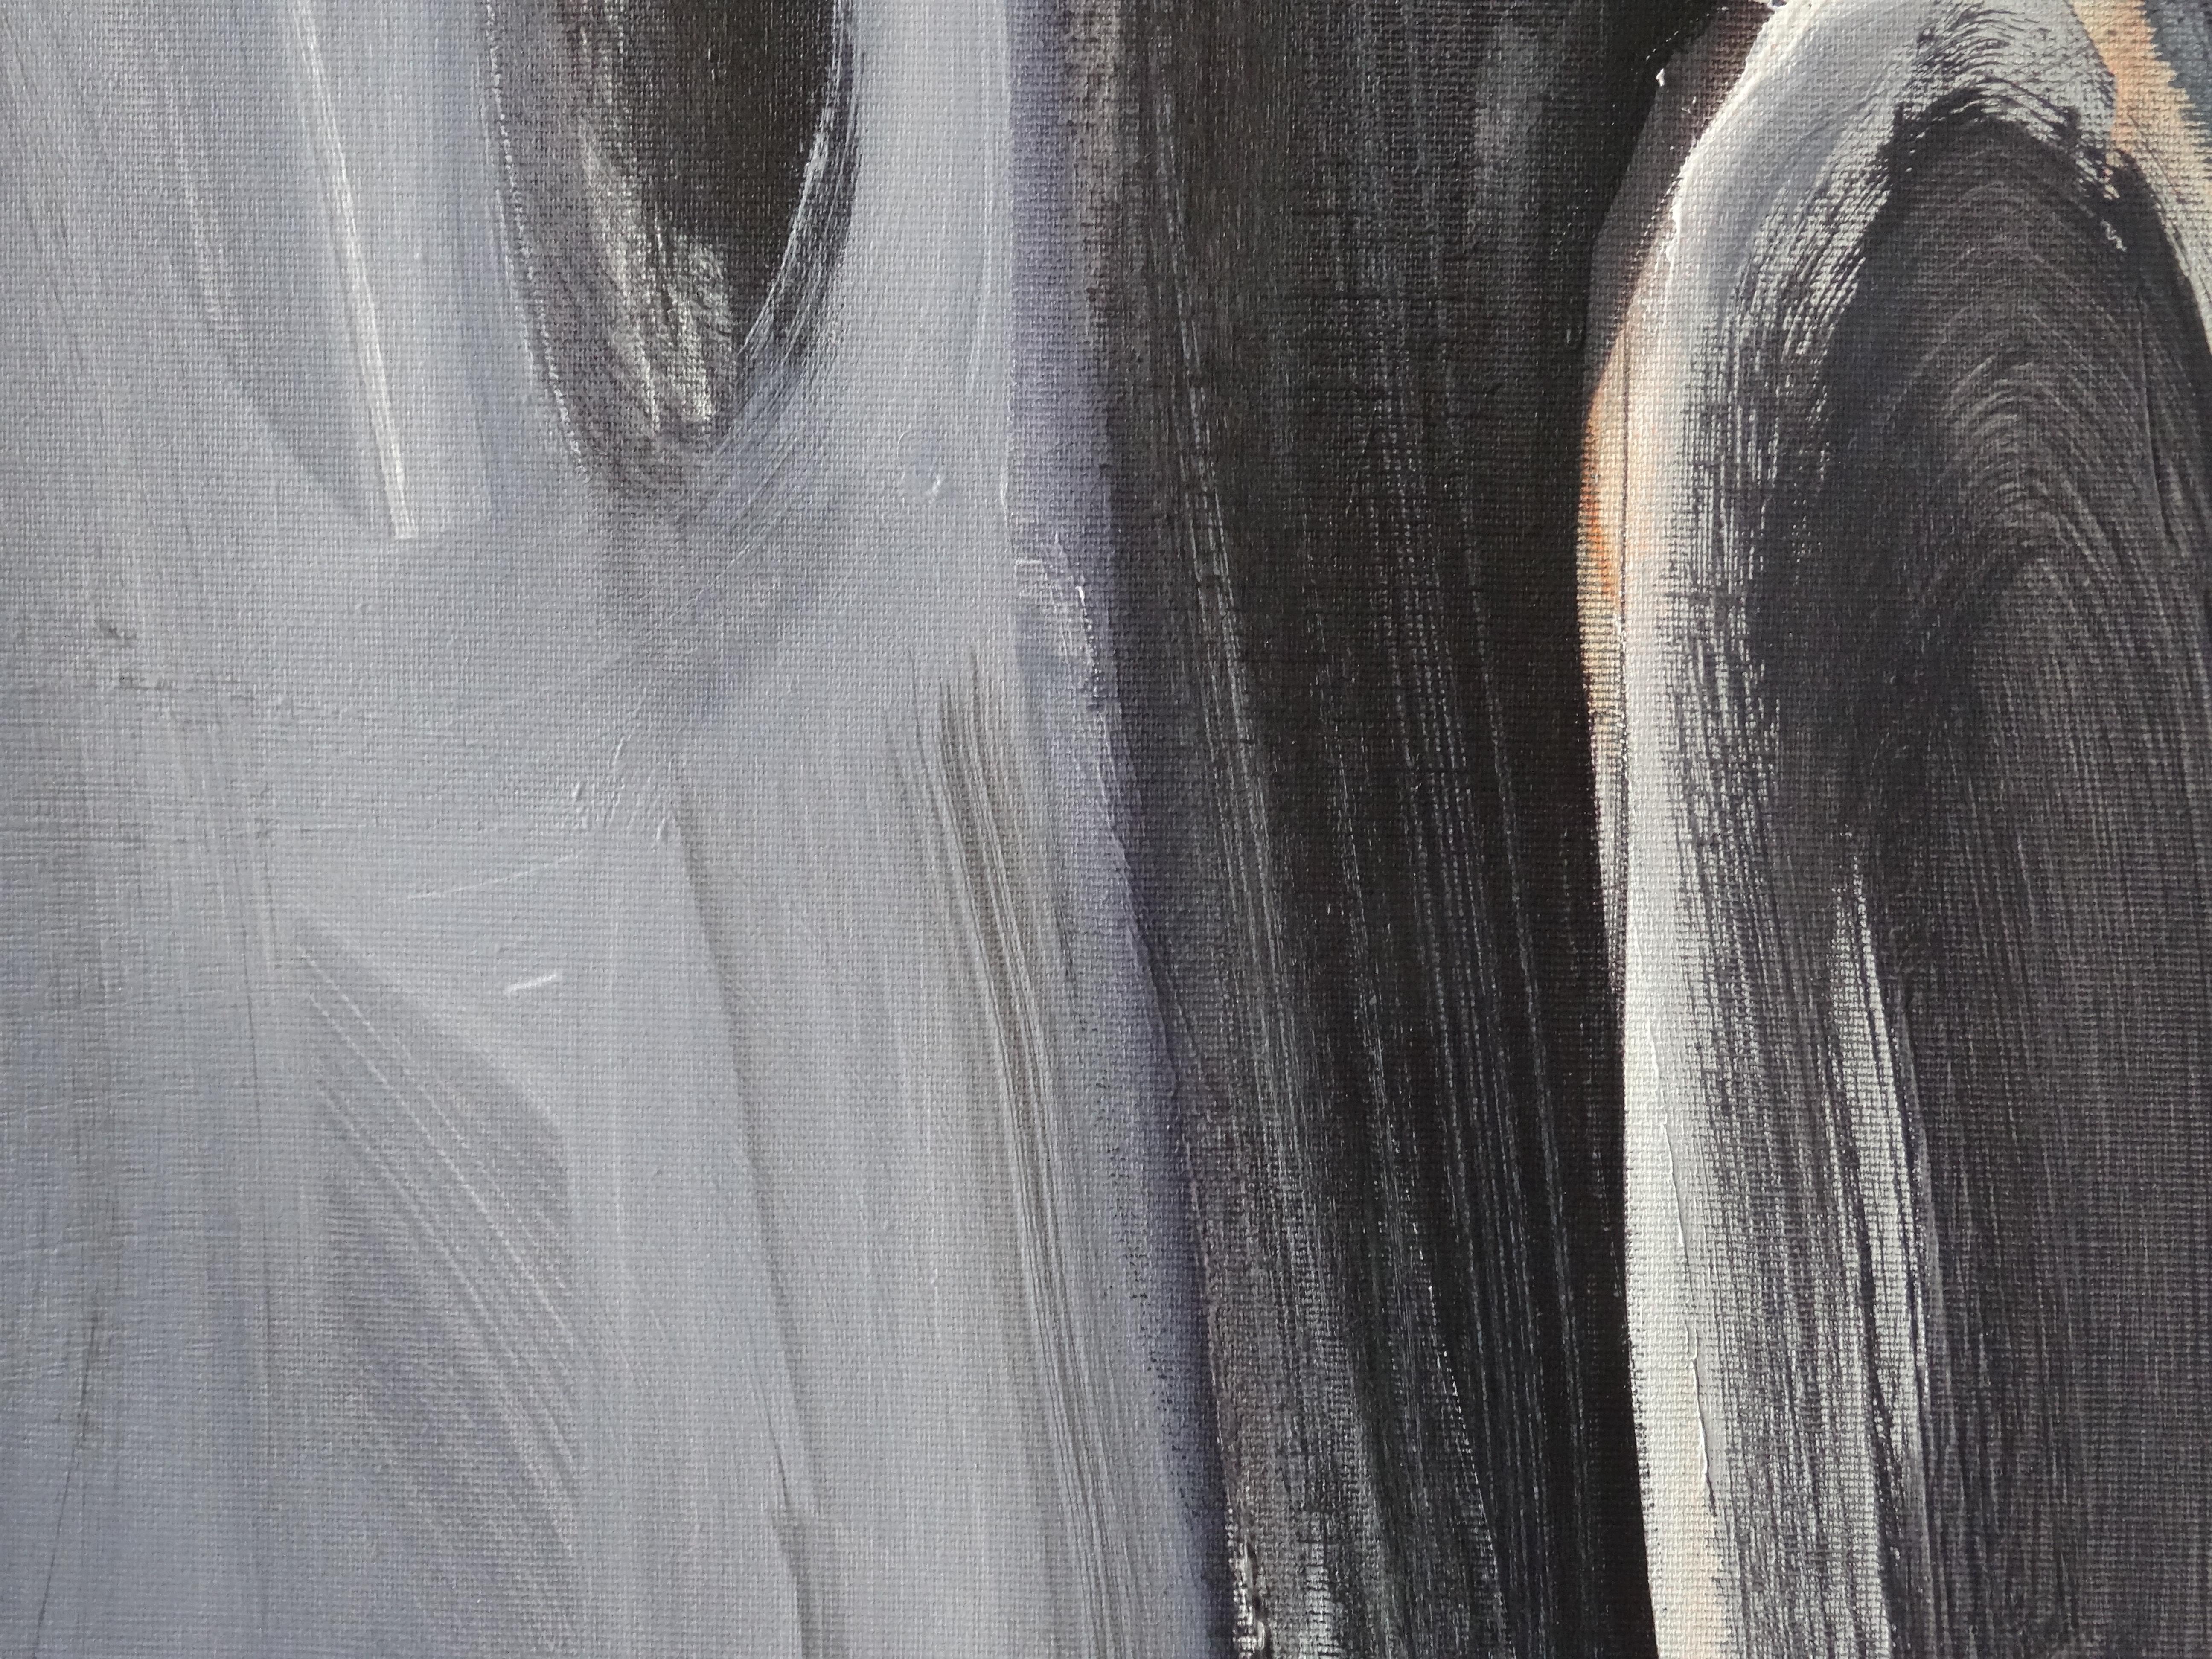 Human touch II. 2020. Canvas, acrylic, 110x150 cm - Gray Abstract Painting by Irina Spakova